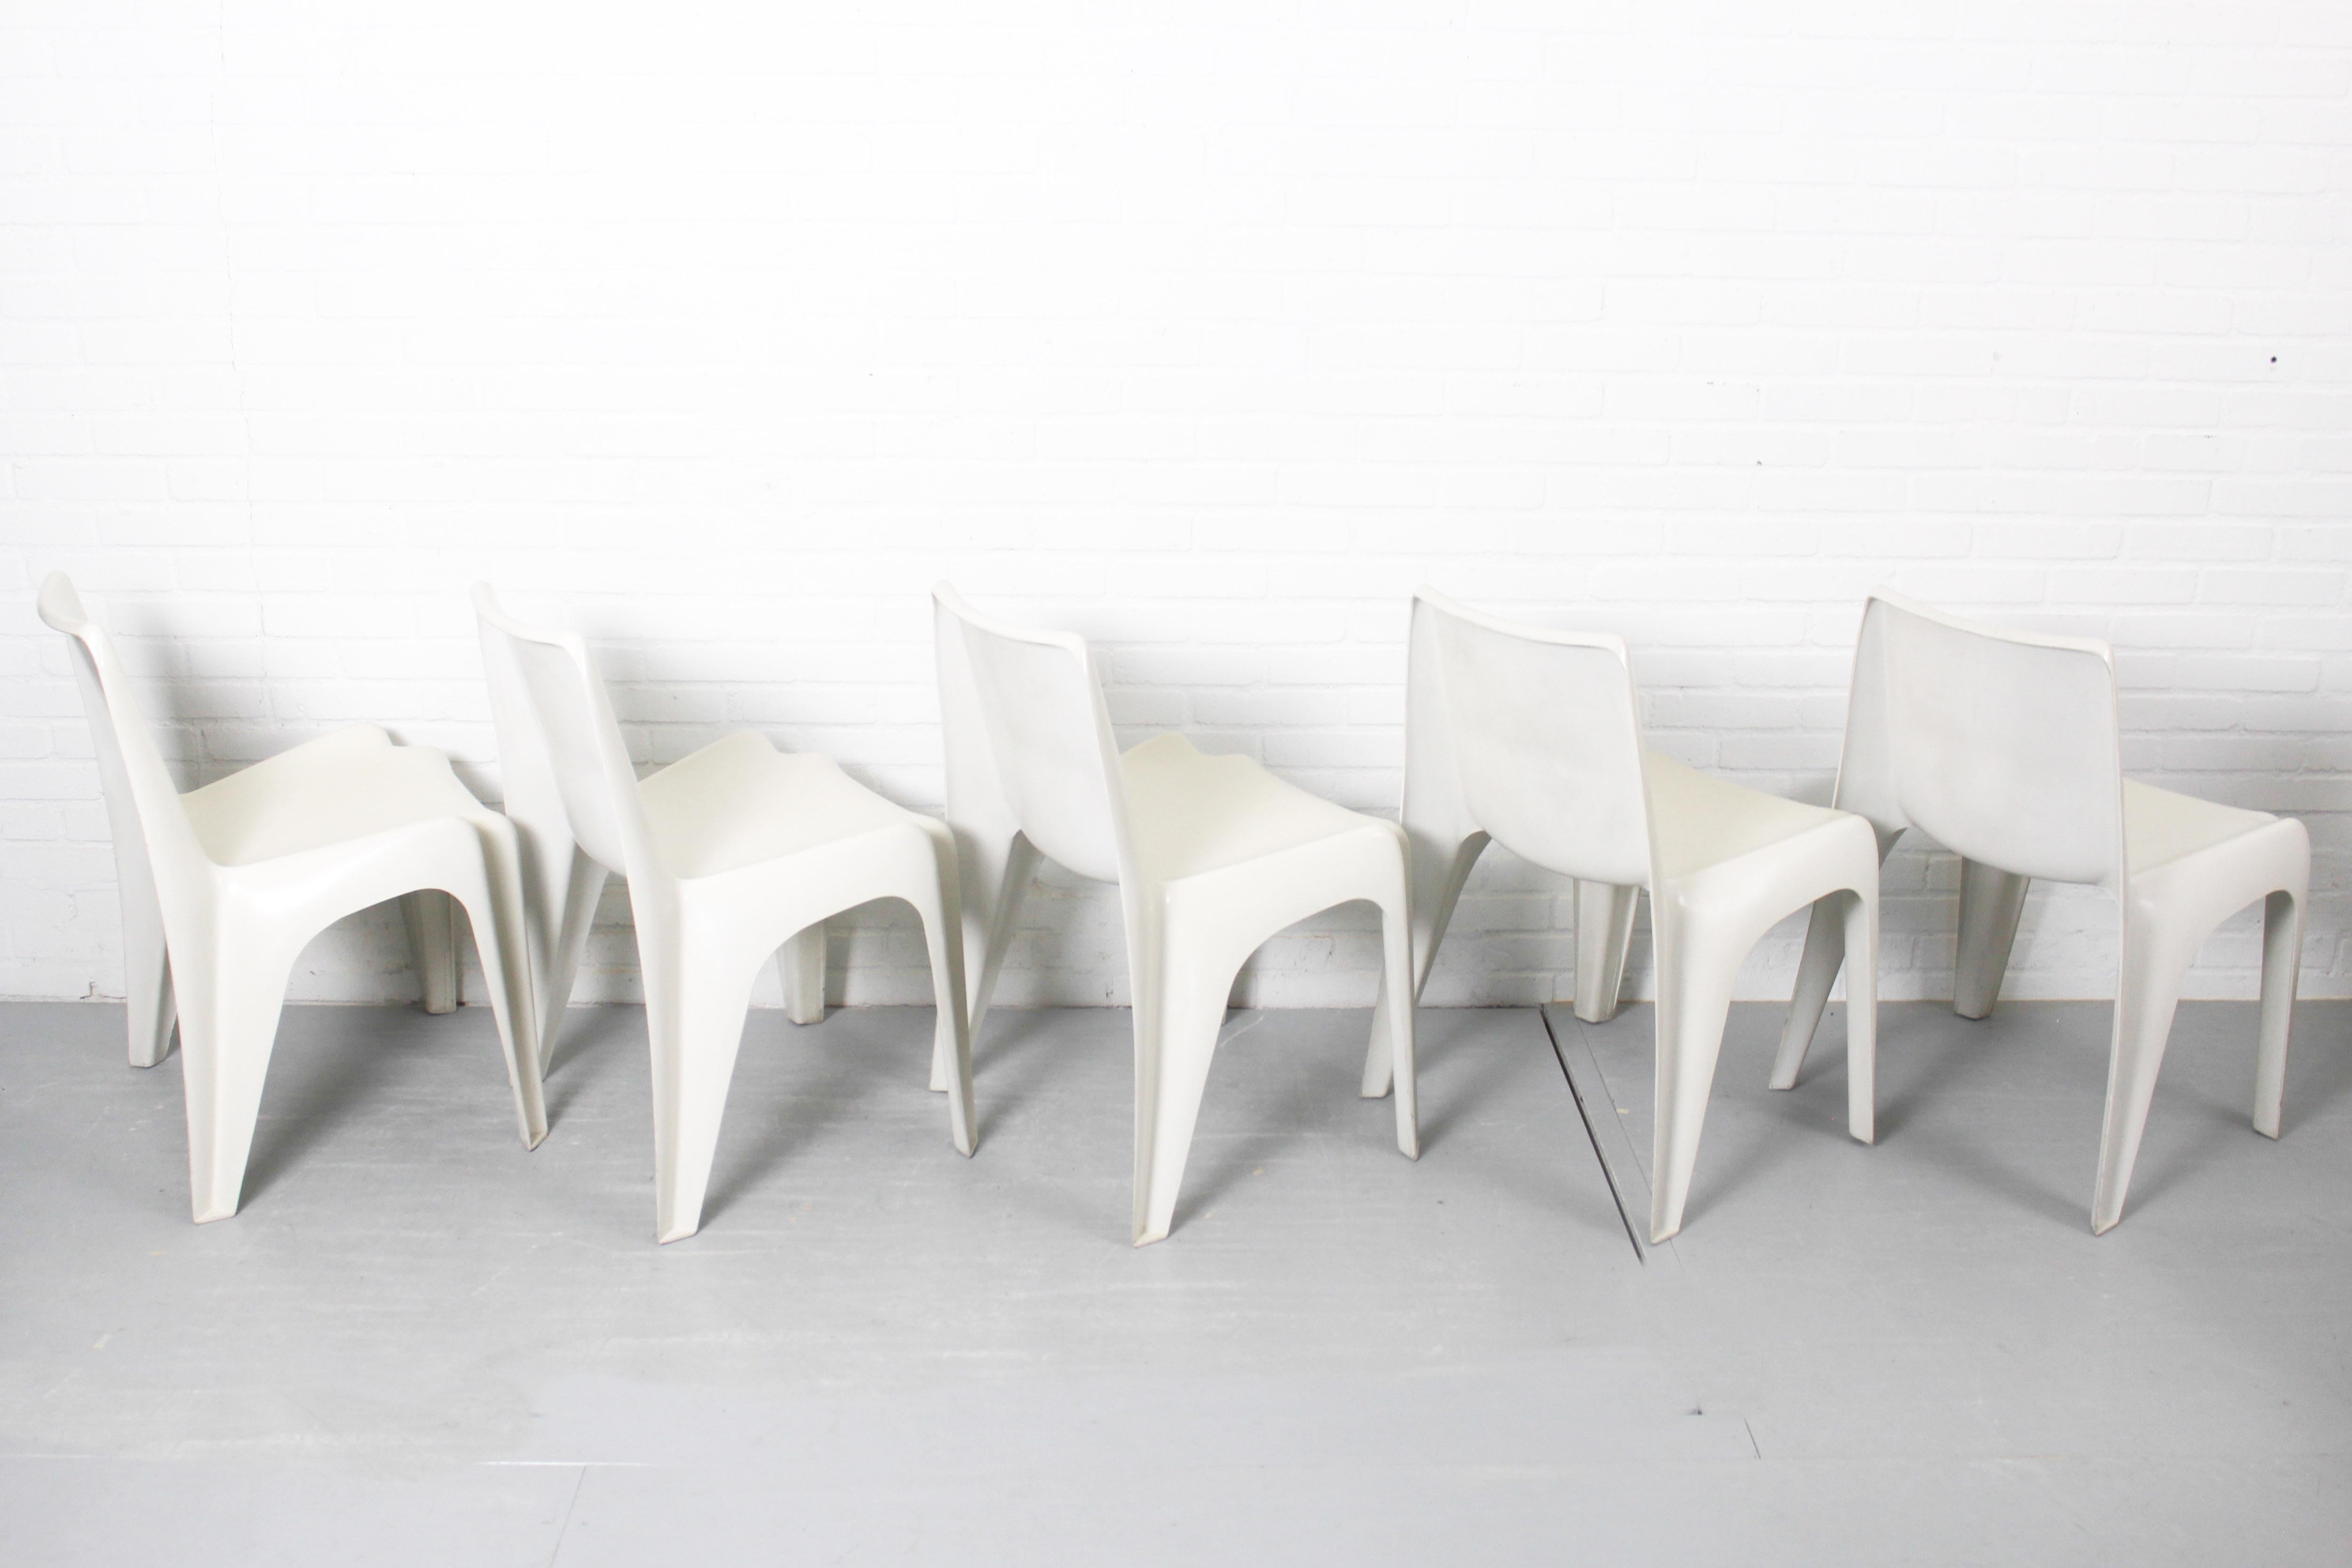 Plastic Set of 5 chairs model no BA 1171 designed by Helmut Bätzner for Bofinger, German For Sale